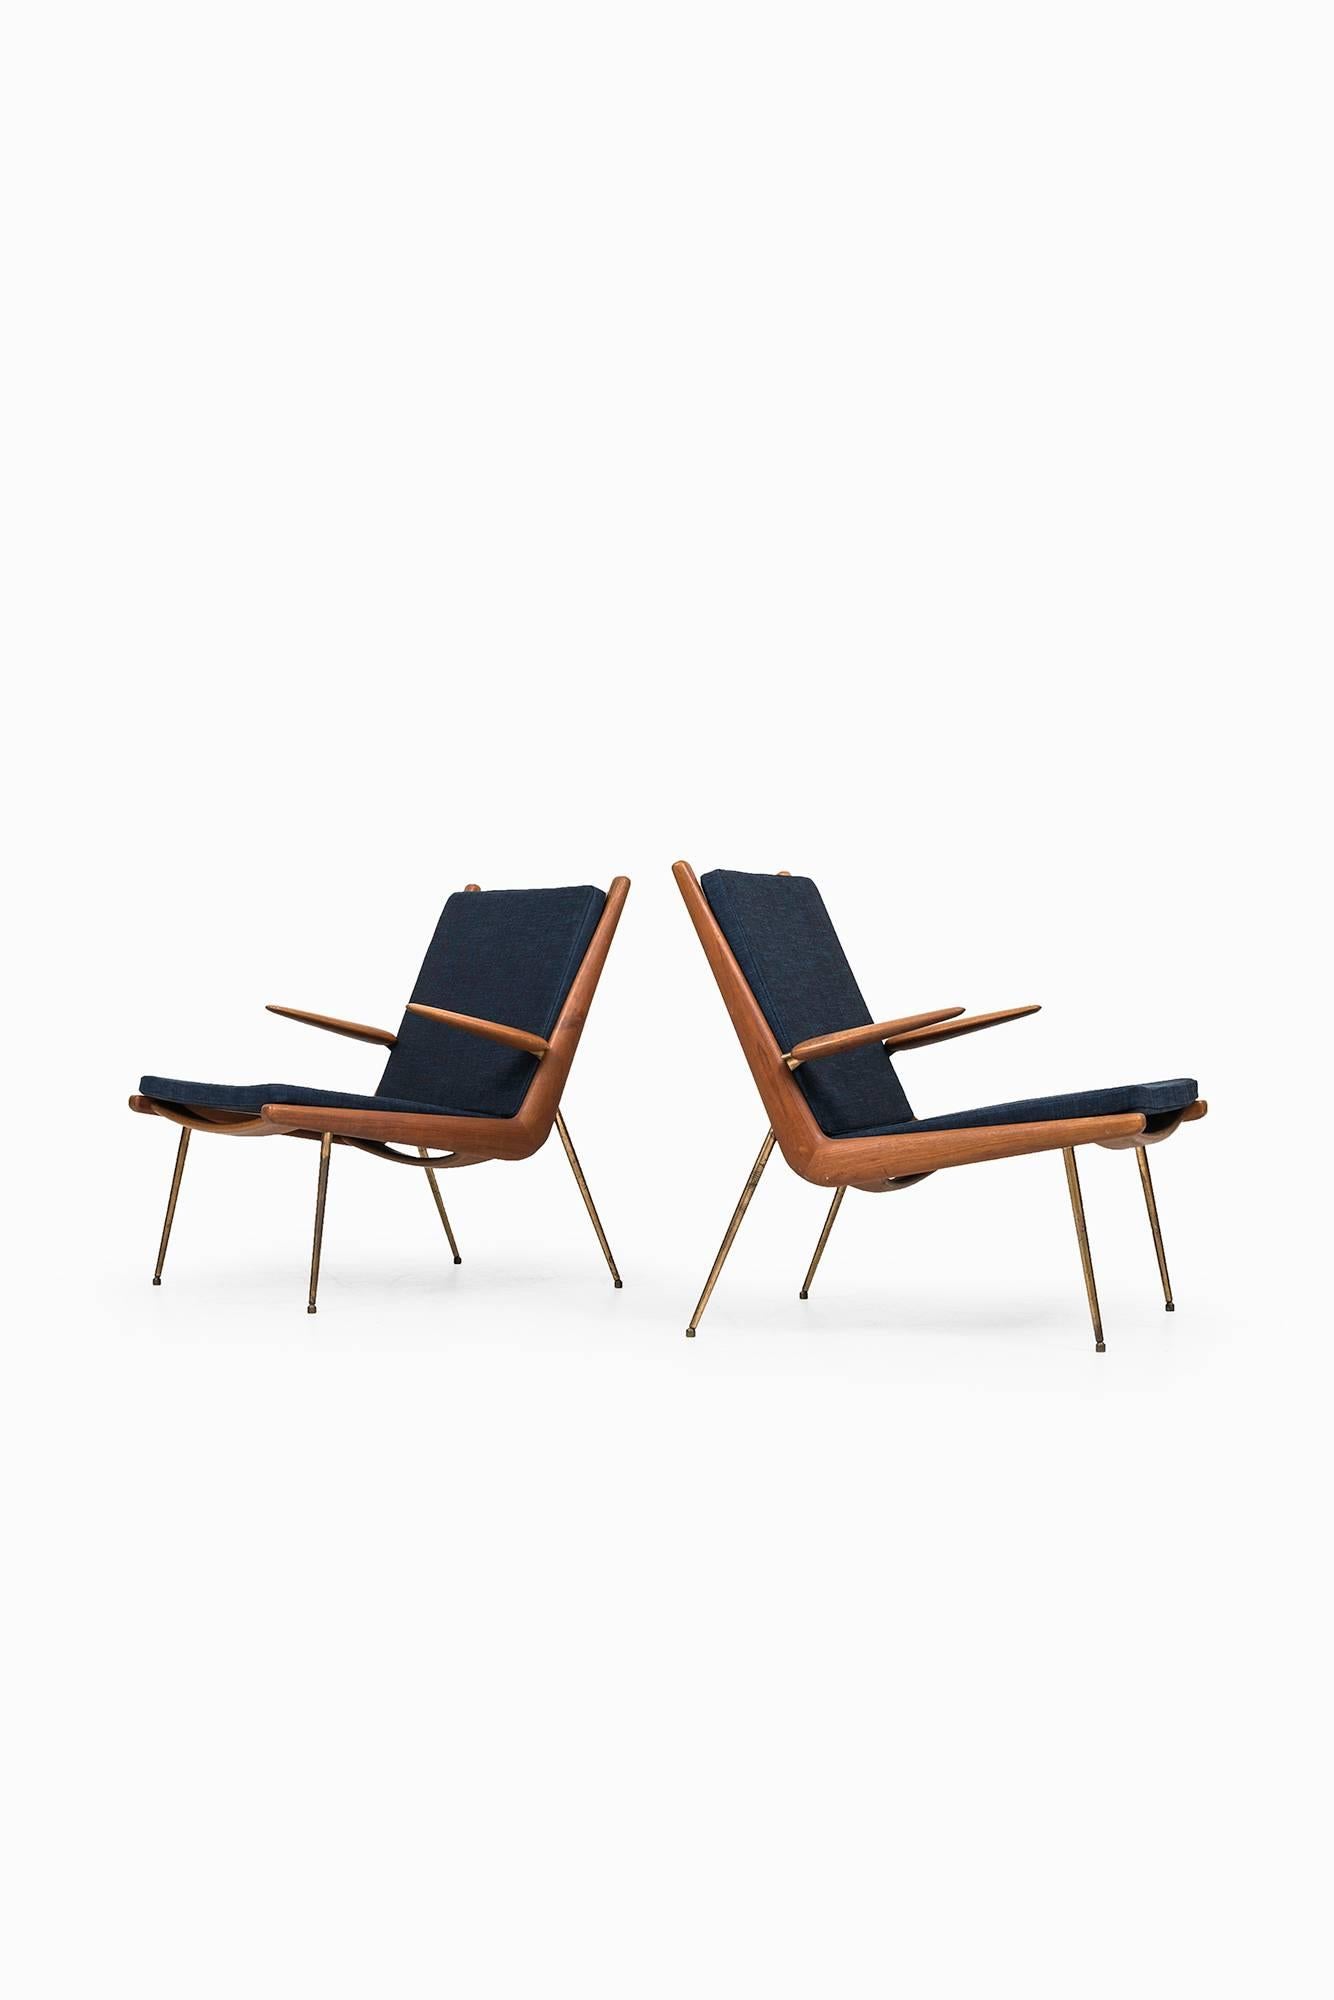 Scandinavian Modern Peter Hvidt & Orla Mølgaard-Nielsen Easy Chairs Model FD-134 / Boomerang